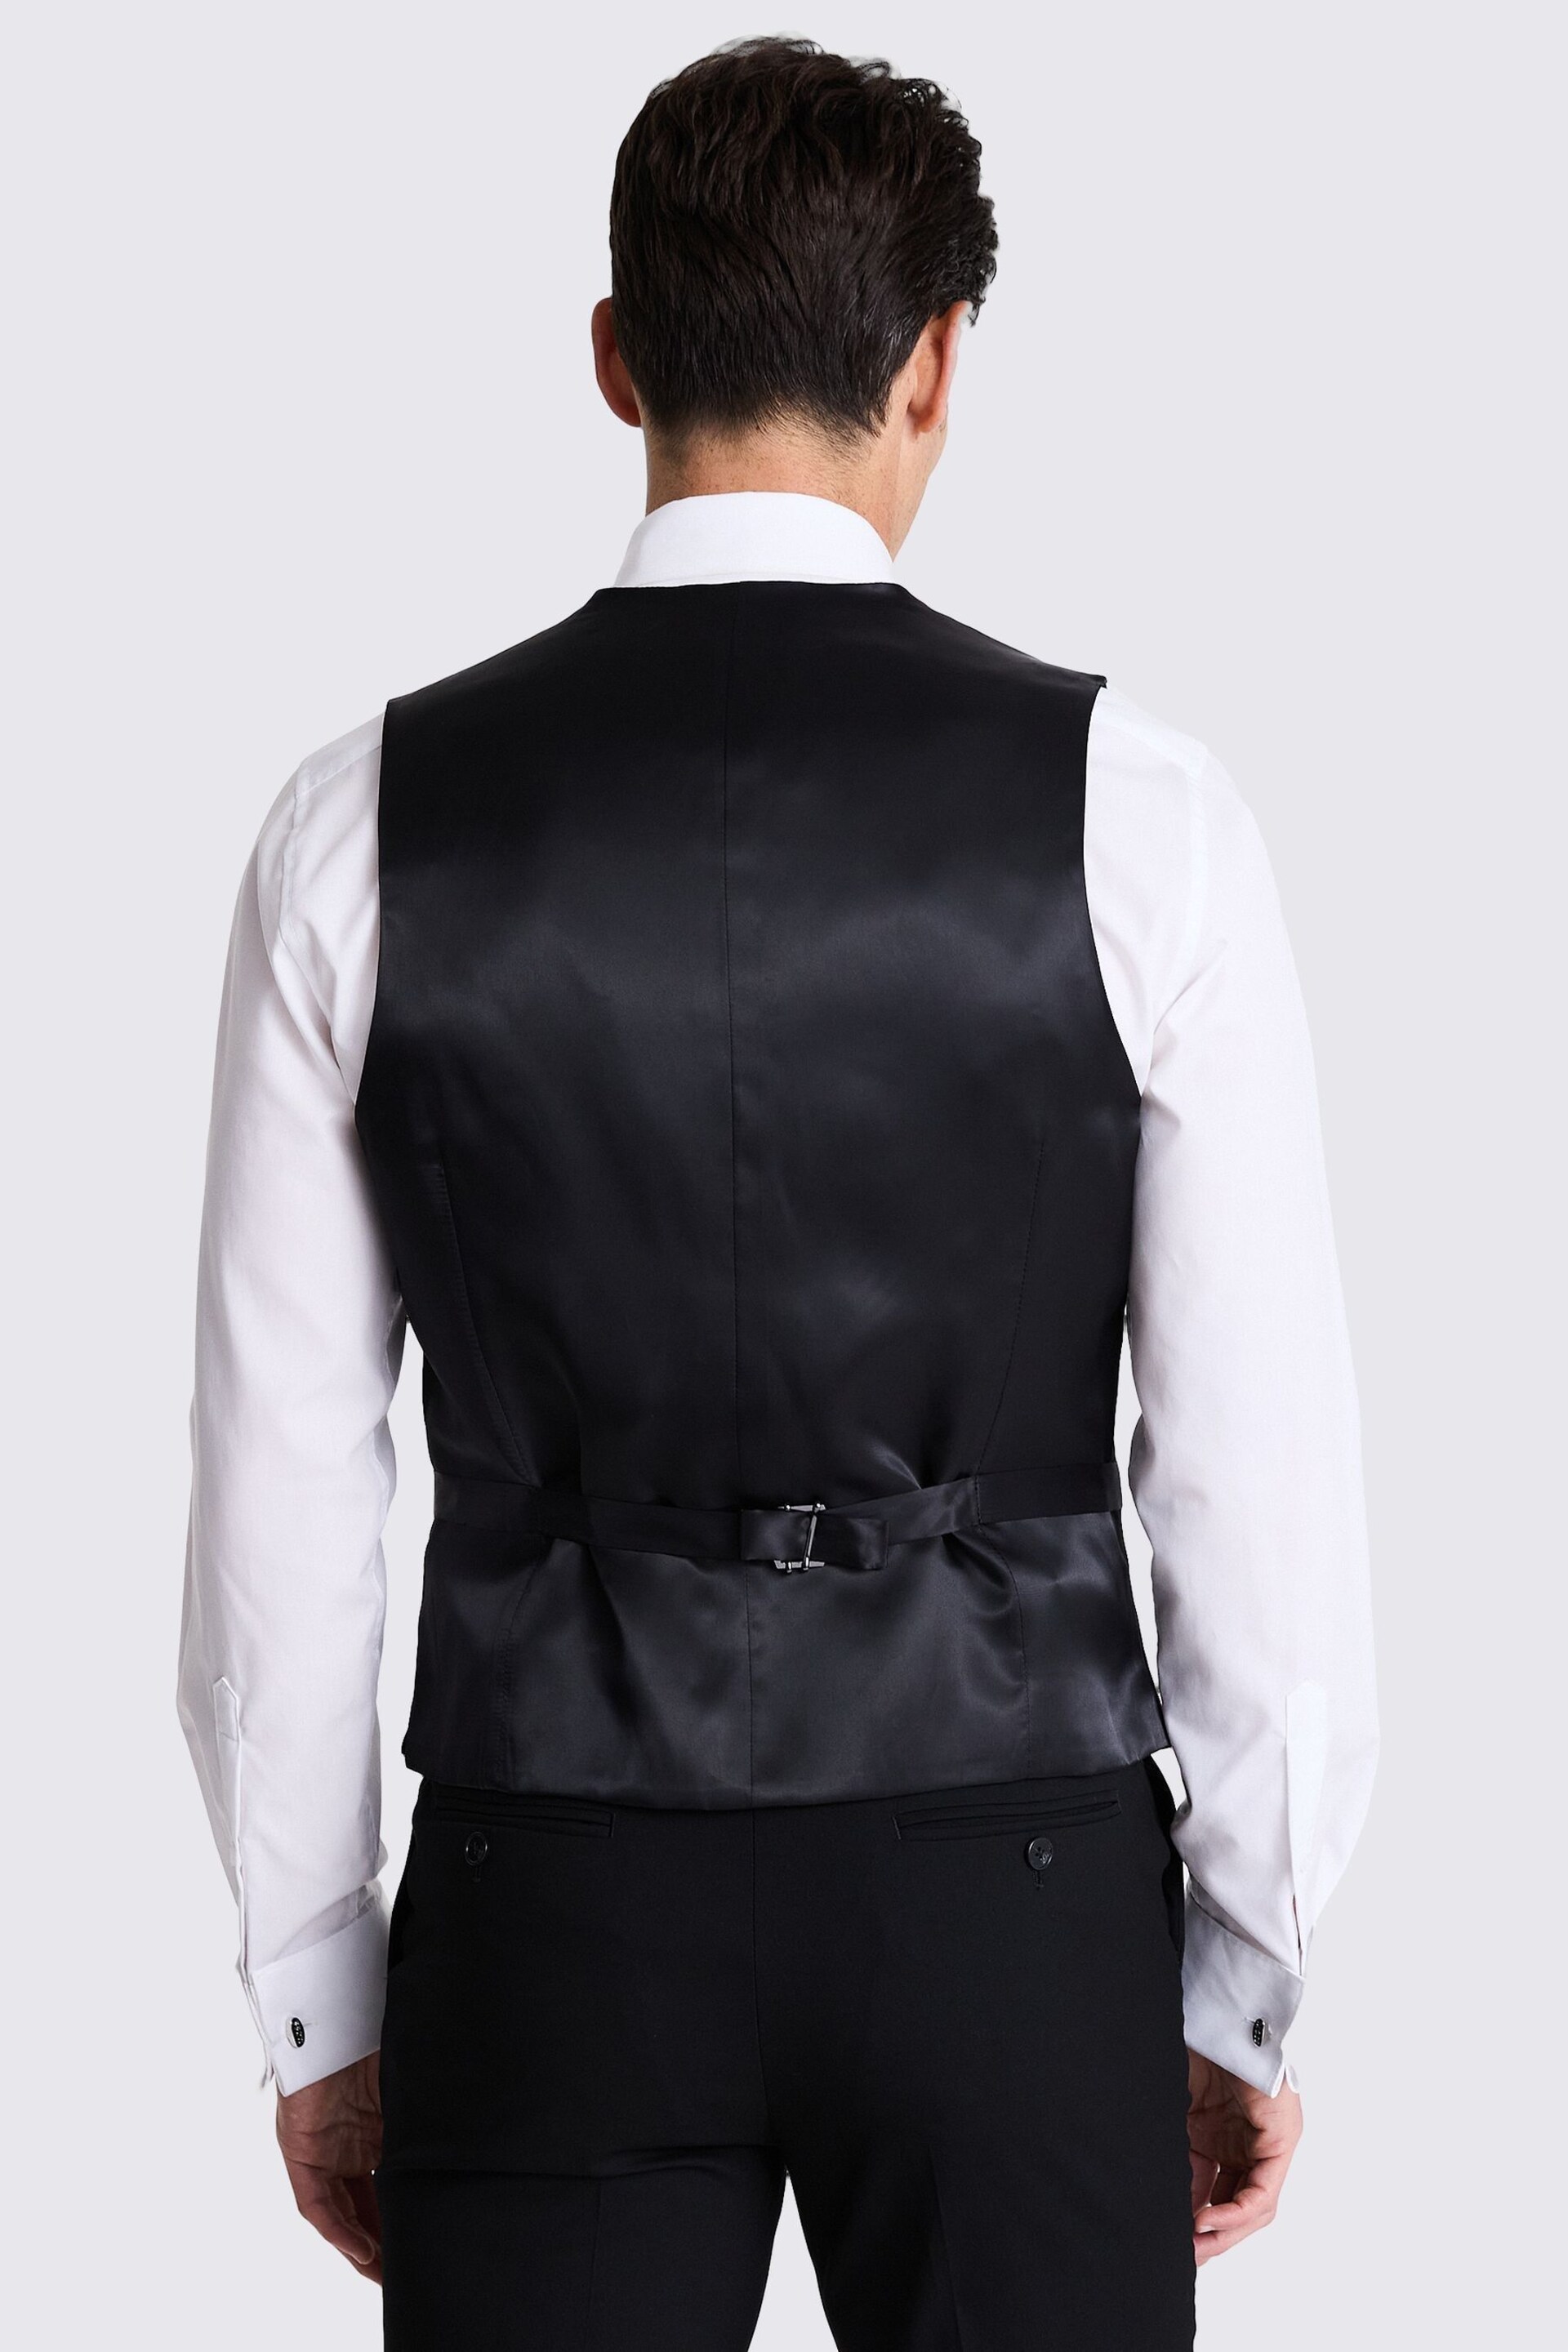 MOSS Black Tailored Fit Dress Waistcoat - Image 2 of 3